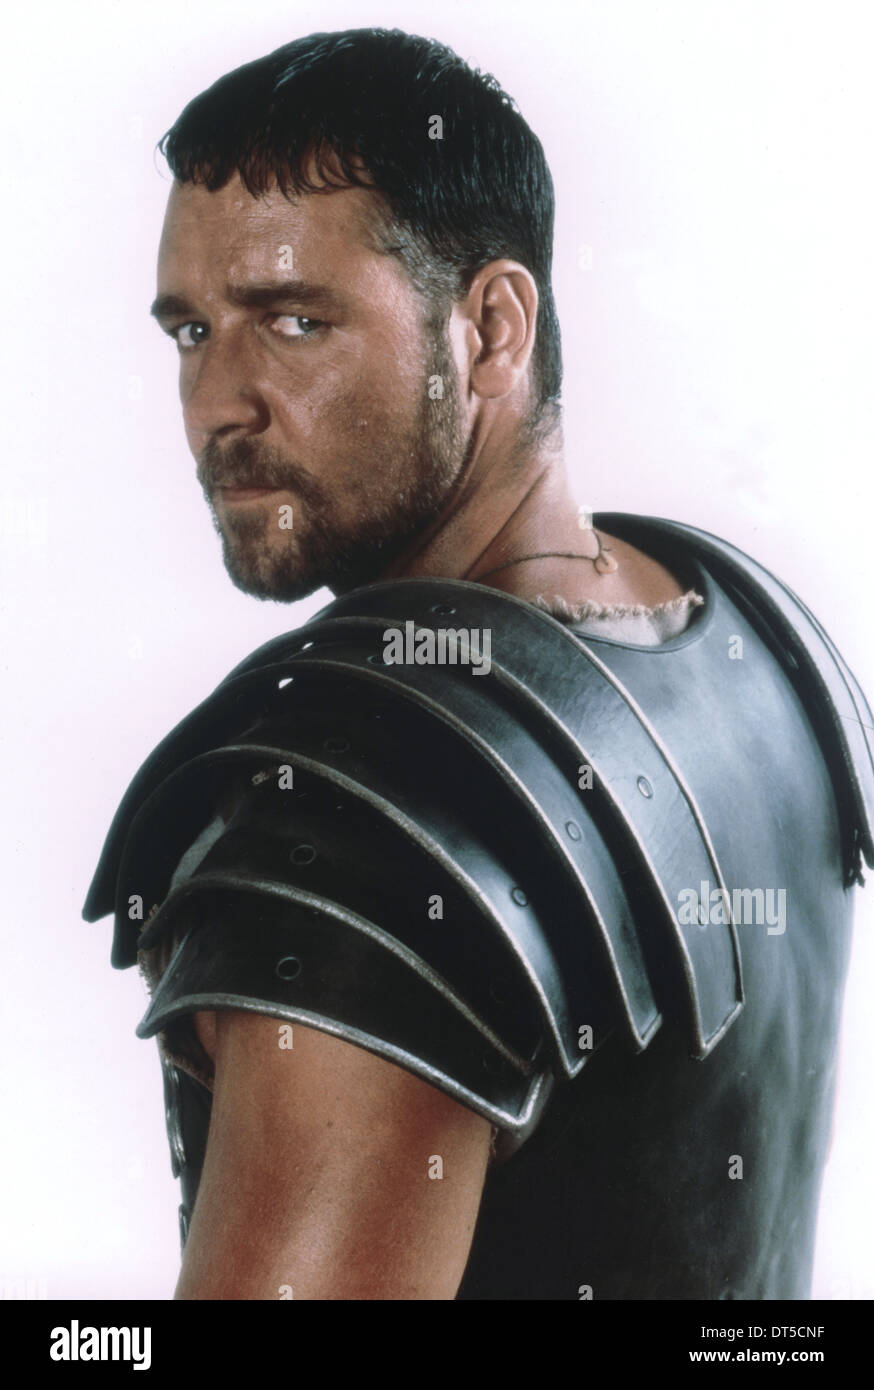 Russell Crowe Gladiator Beard